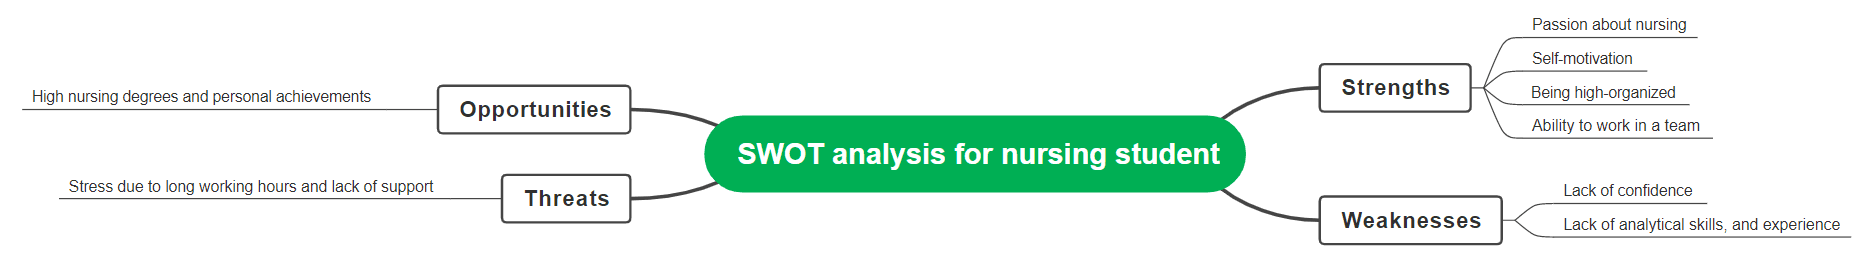 SWOT analysis for nursing student